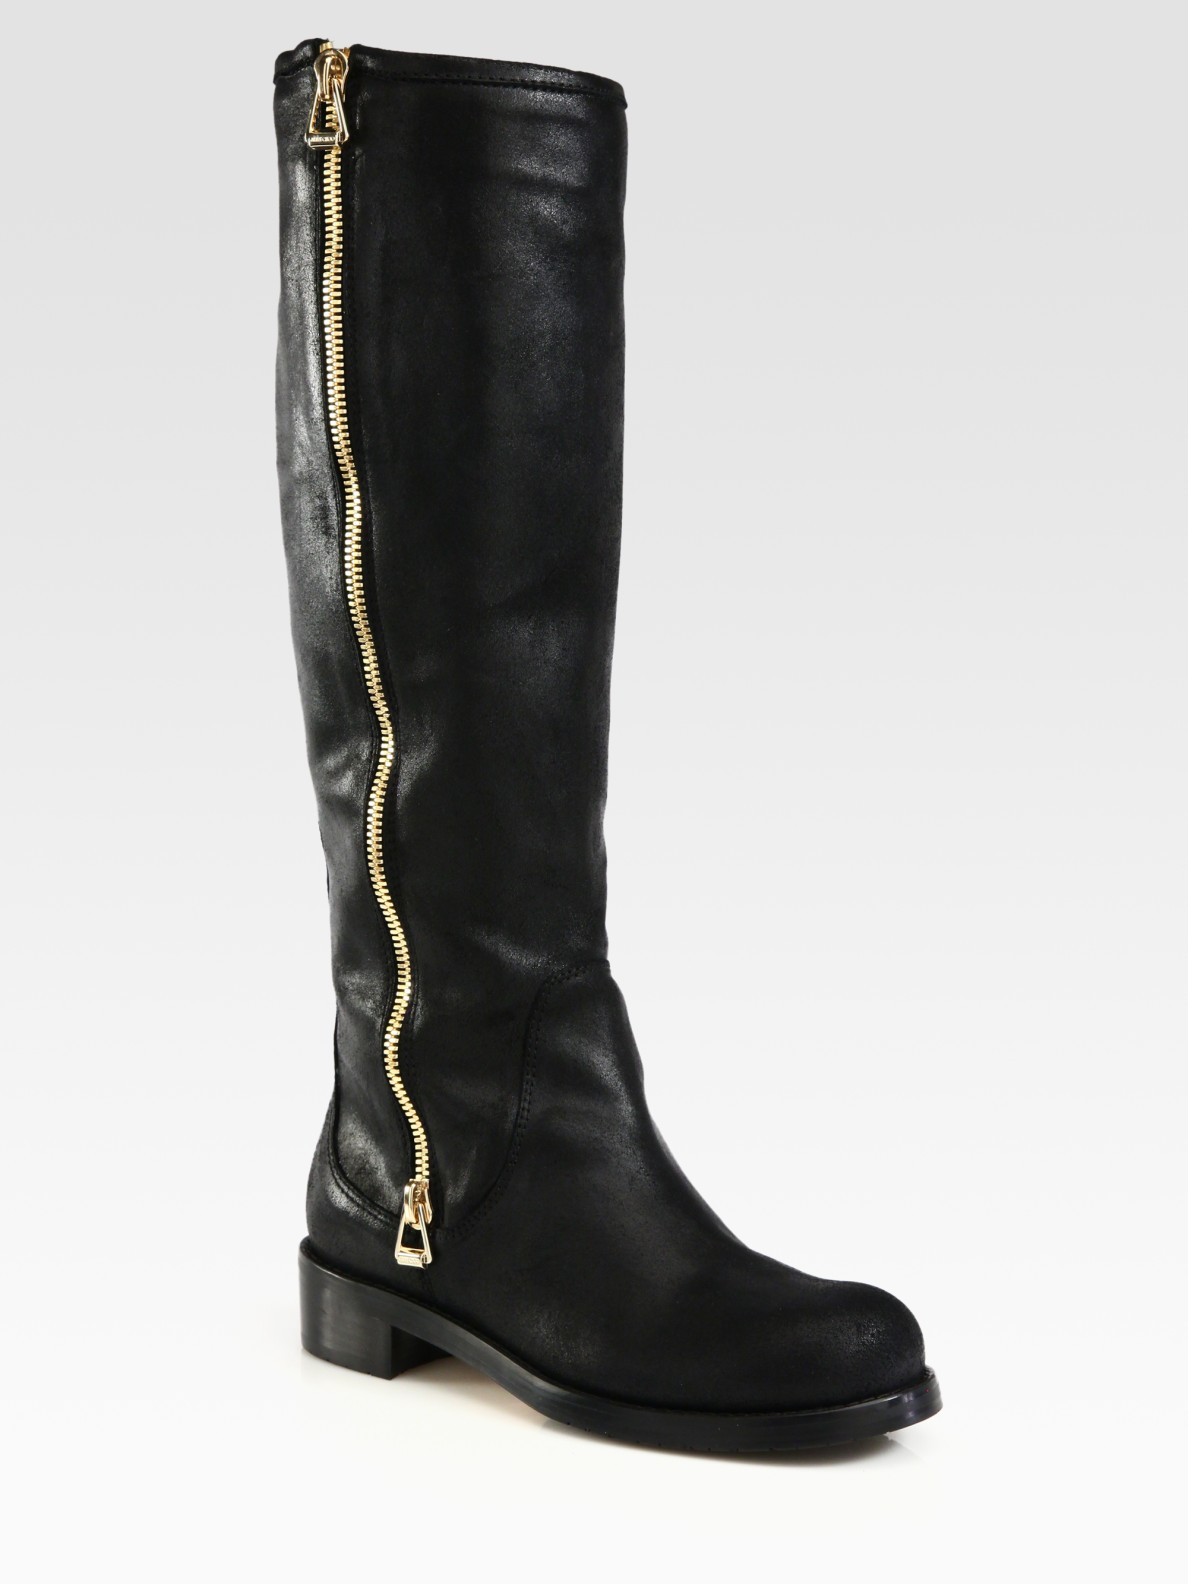 Lyst - Jimmy Choo Doreen Oiled Leather Knee High Biker Boots in Black